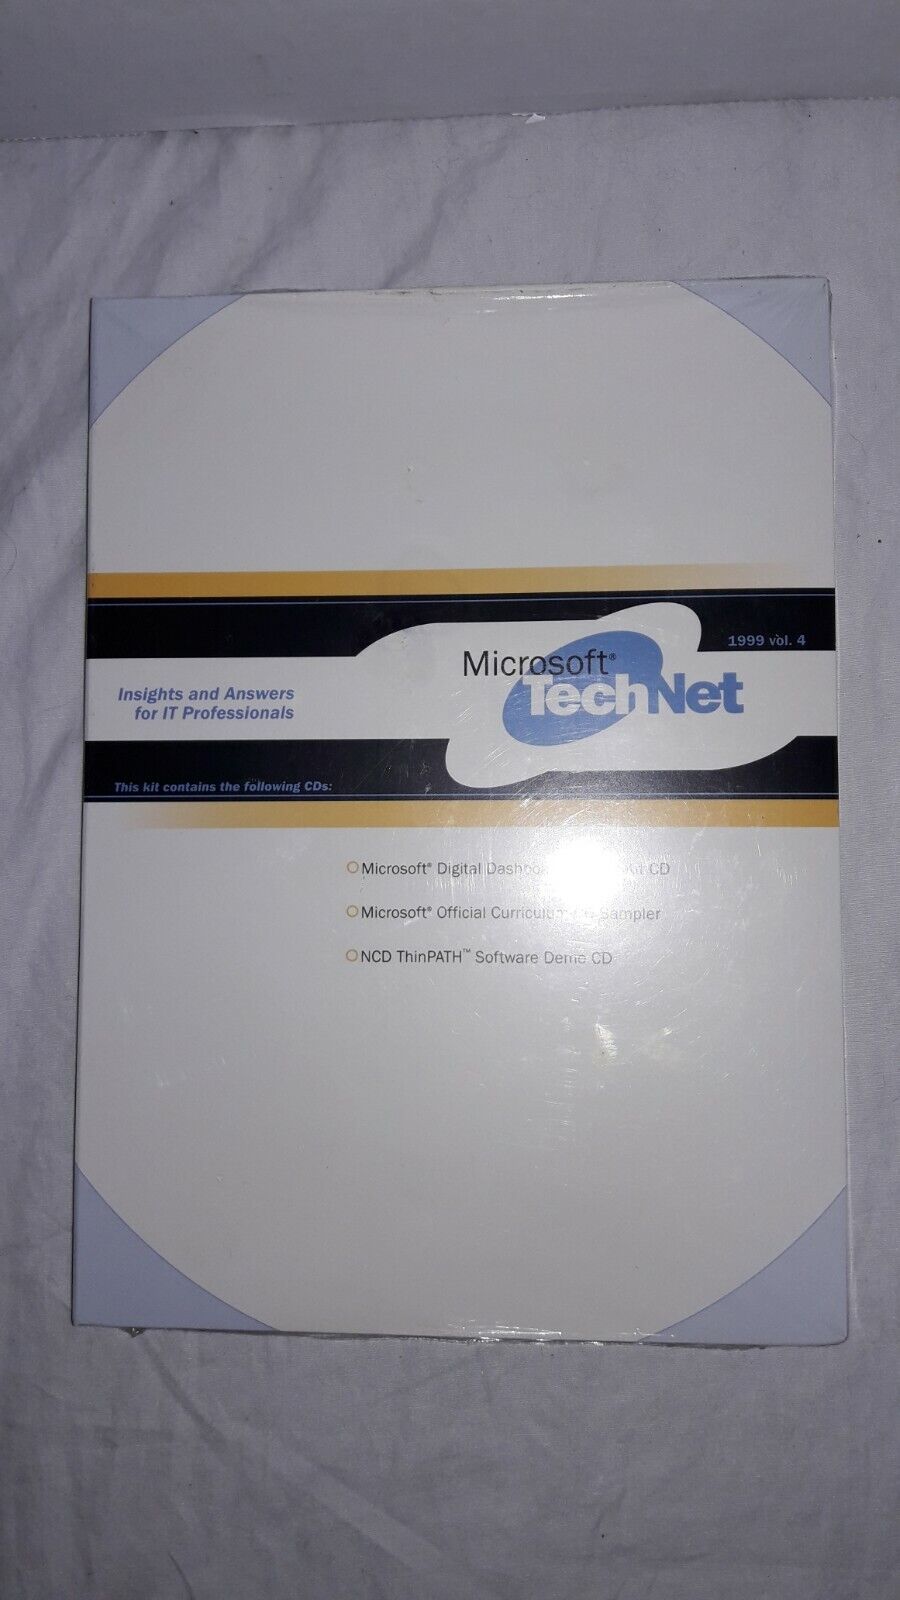 Microsoft Technet, 1999, Vol. 4, 3 CD's, Microsoft Corp. 1999